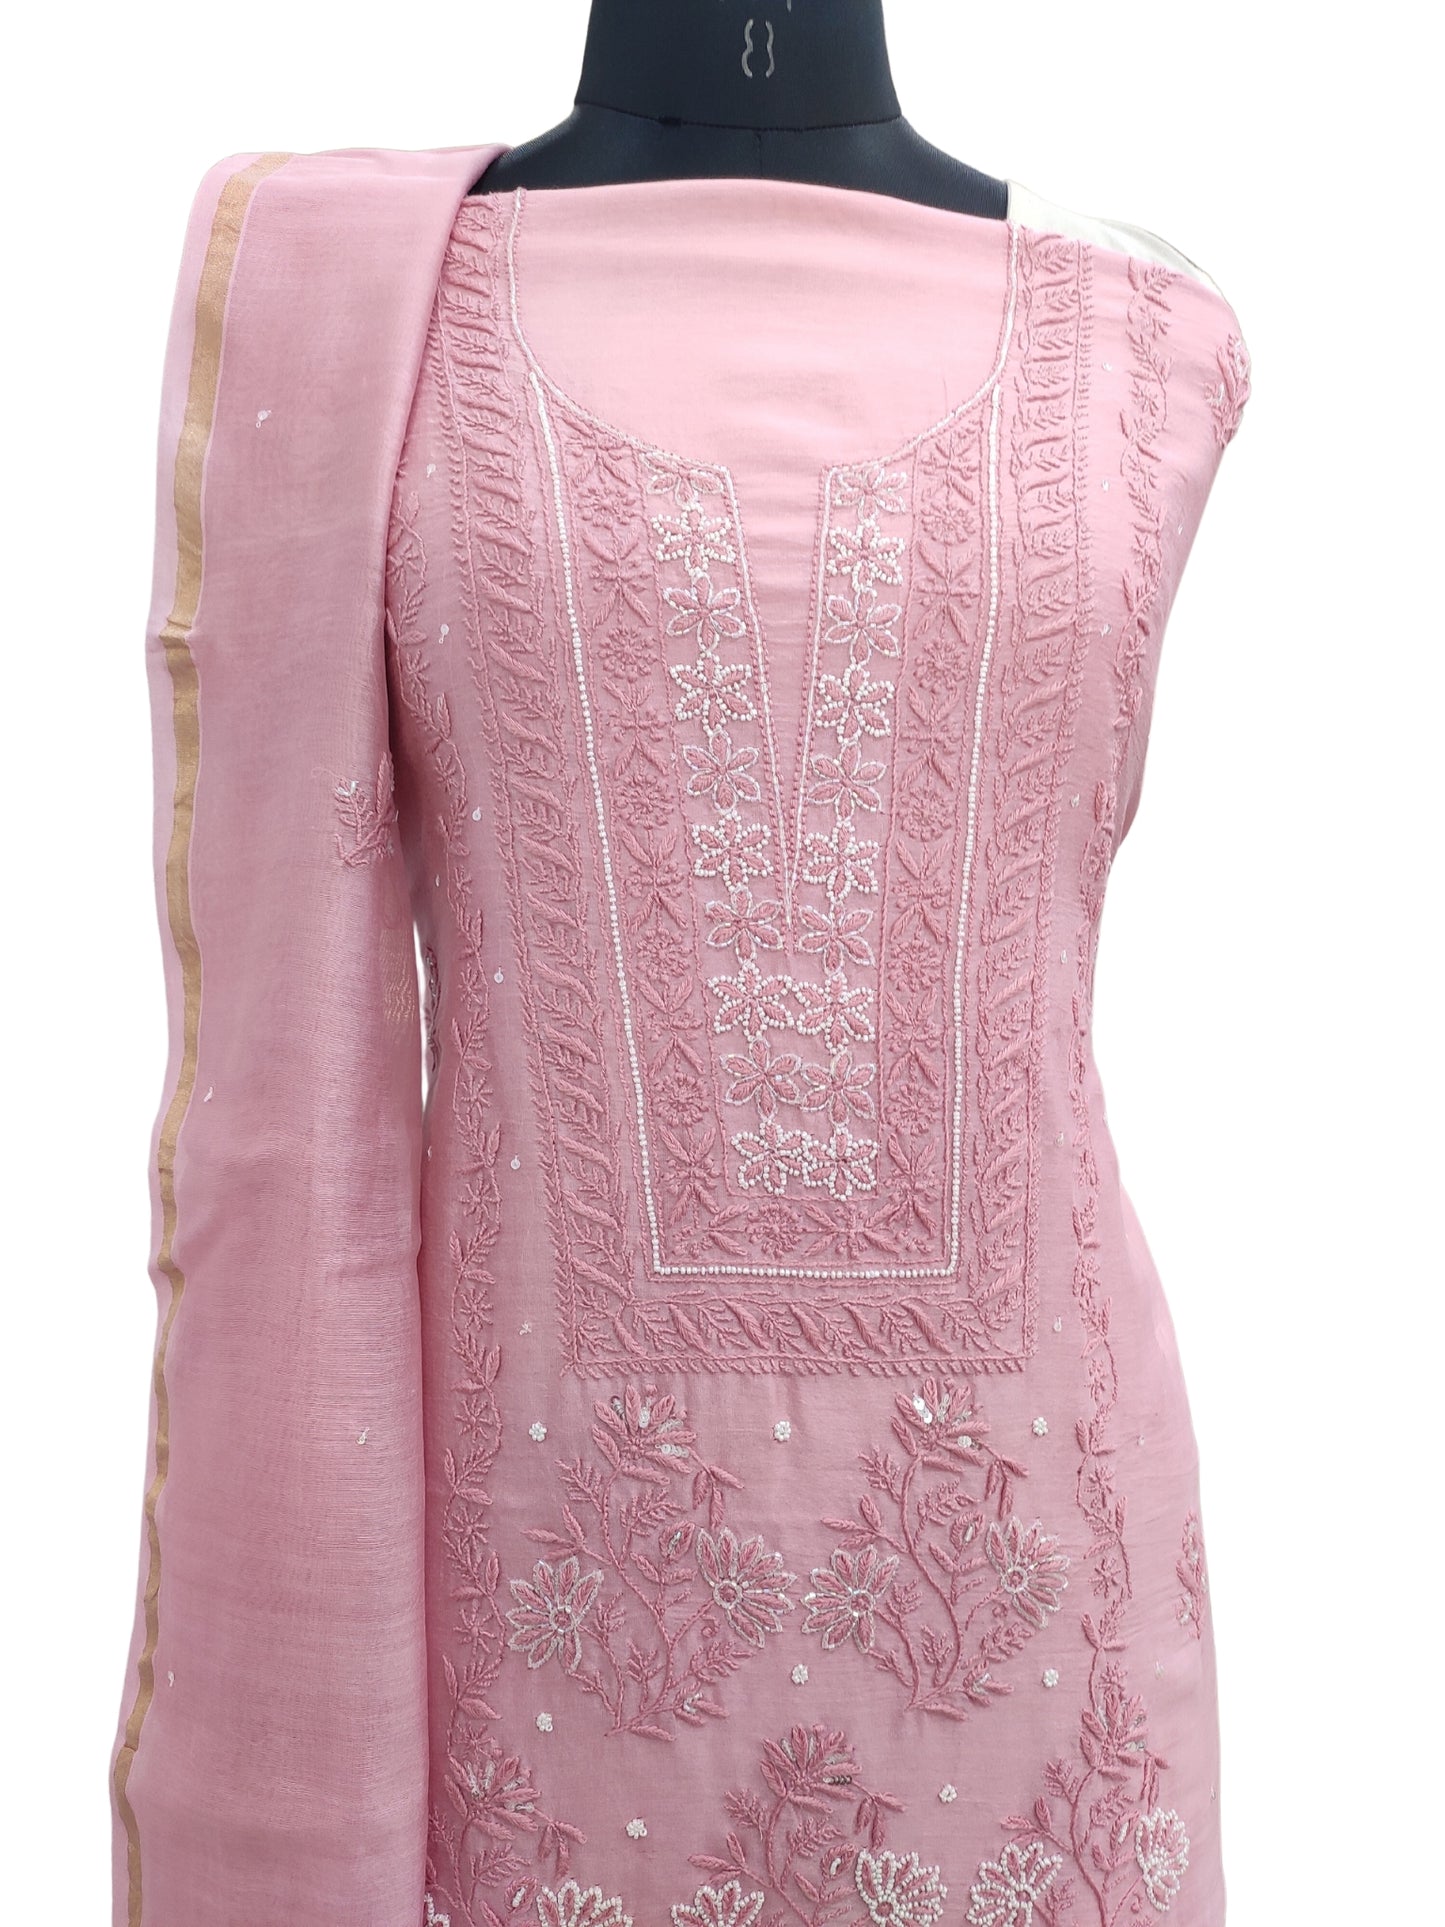 Shyamal Chikan Hand Embroidered Pink Chanderi Lucknowi Chikankari Unstitched Suit Piece with Pearl & Sequin Work (Kurta Dupatta Set) - S20075